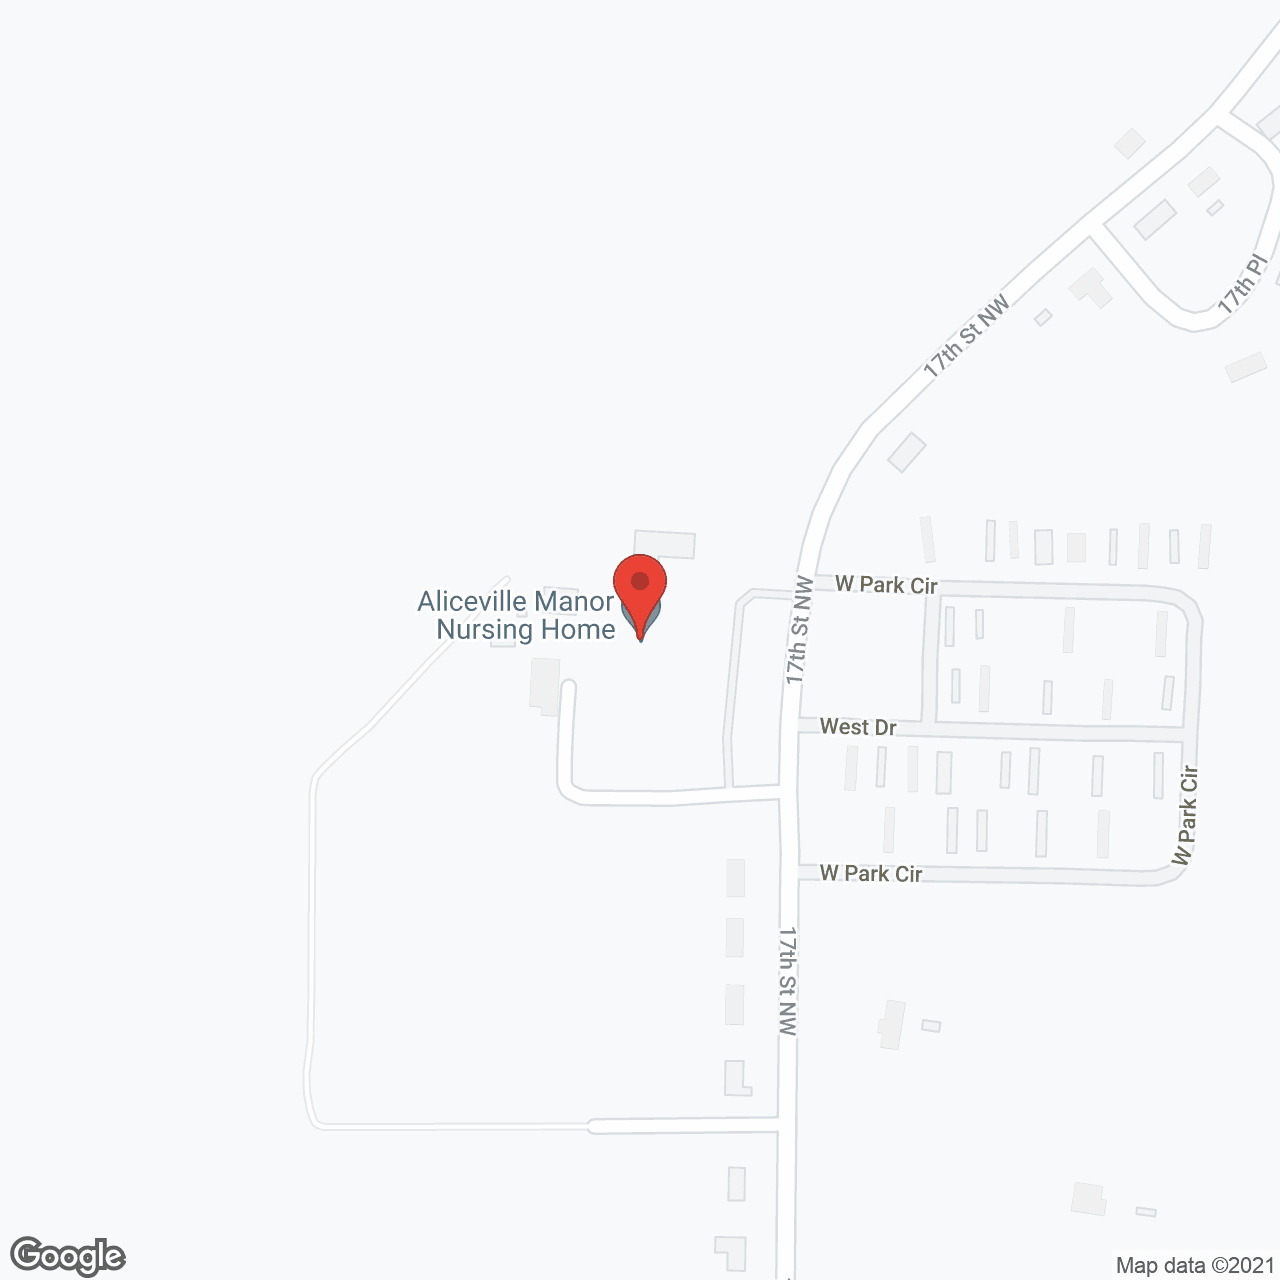 Aliceville Manor Nursing Home in google map